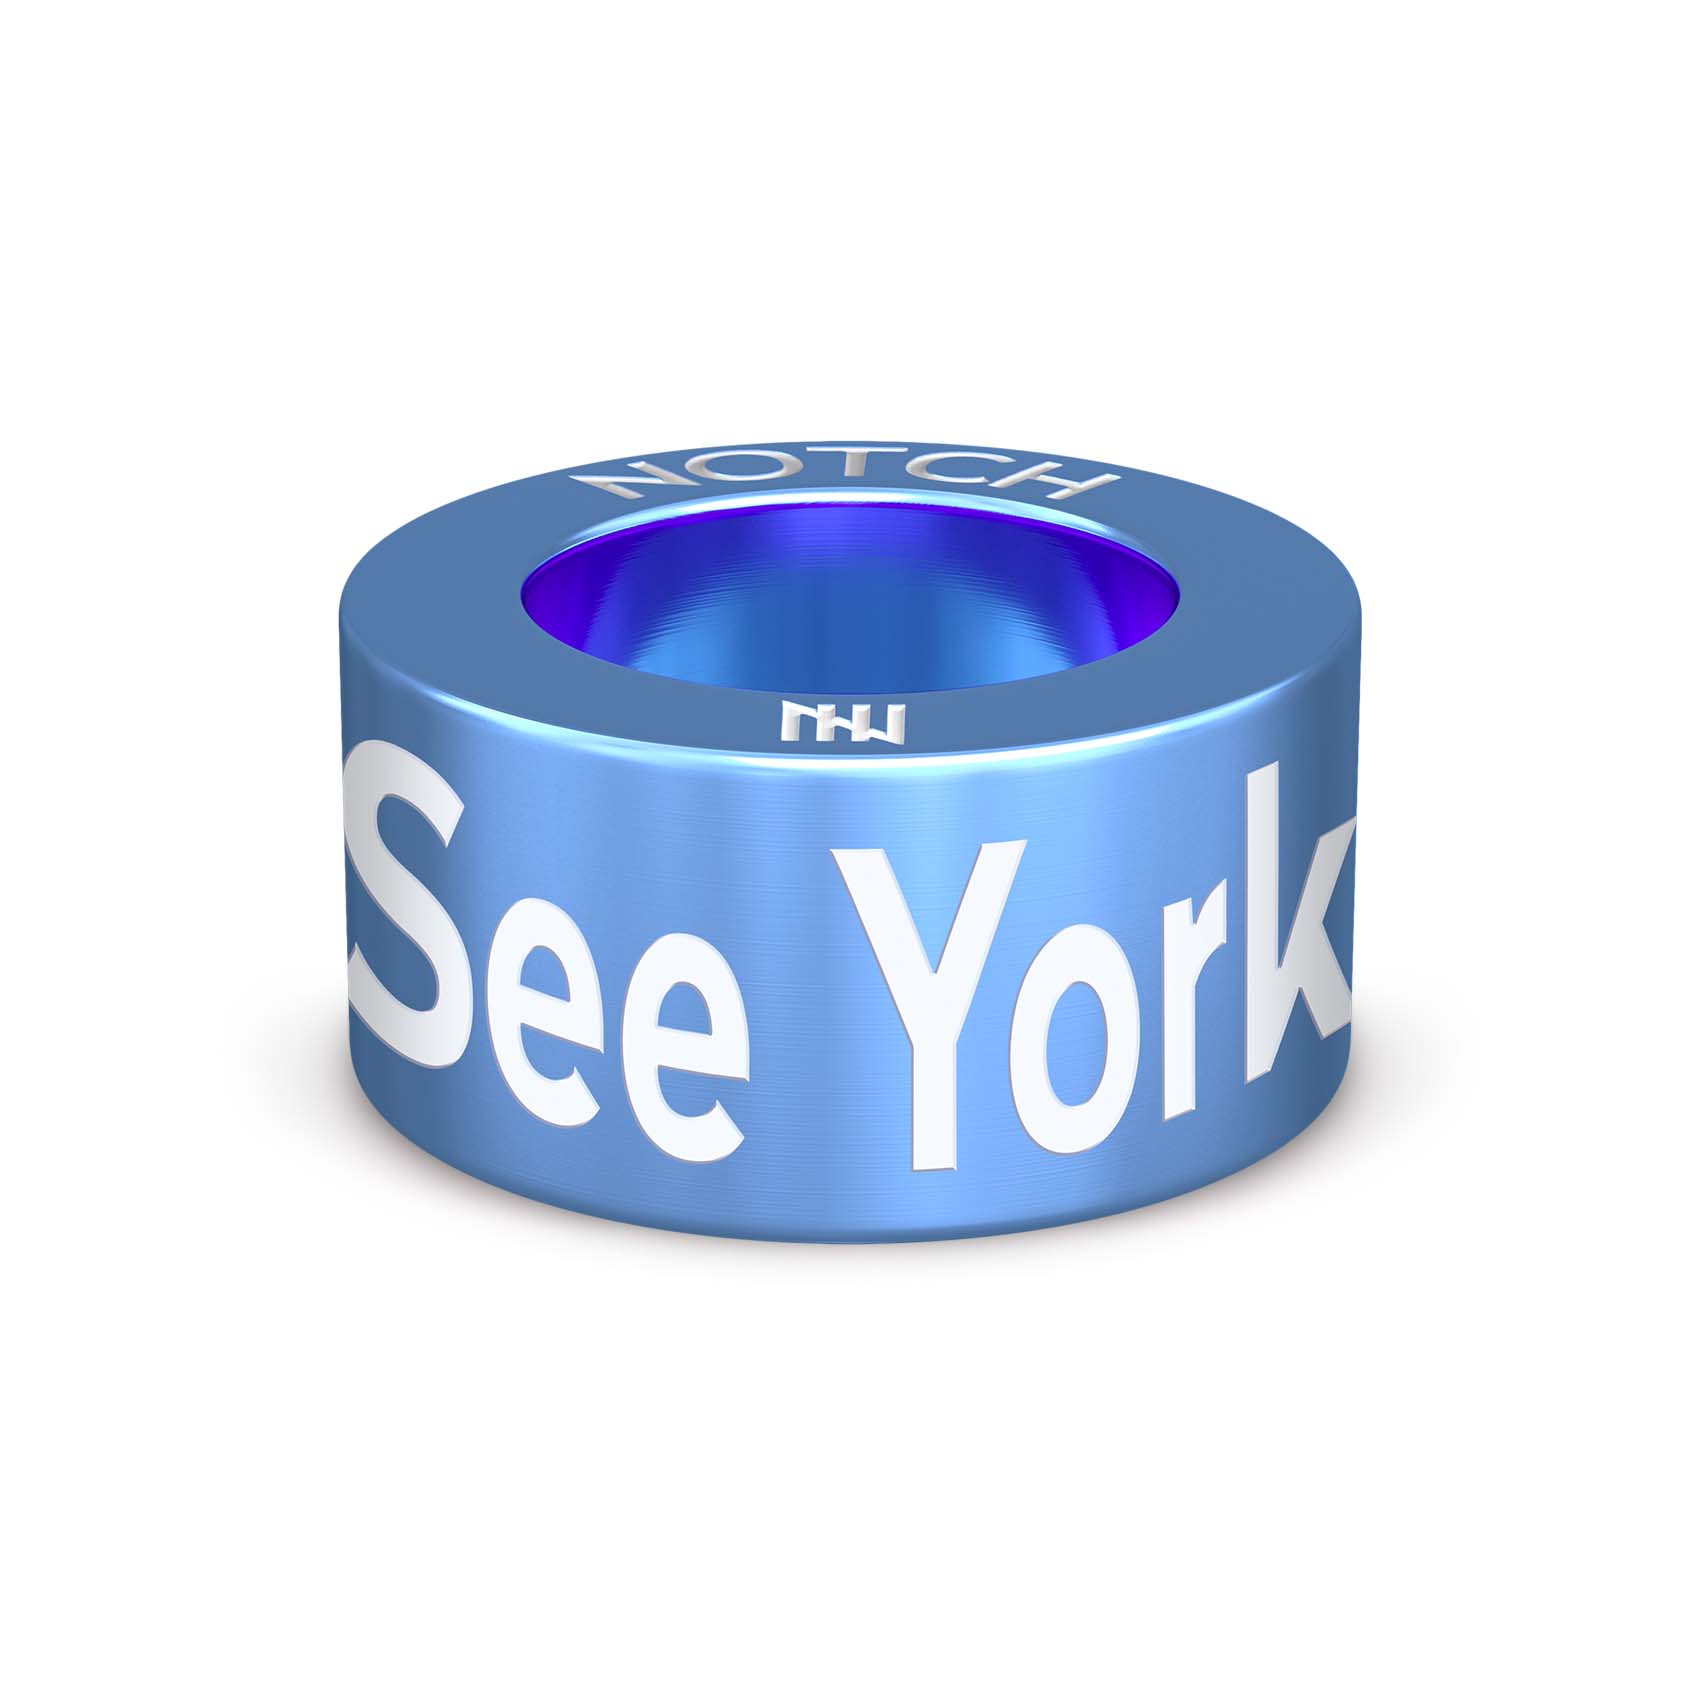 See York Run York NOTCH Charms (Full List)